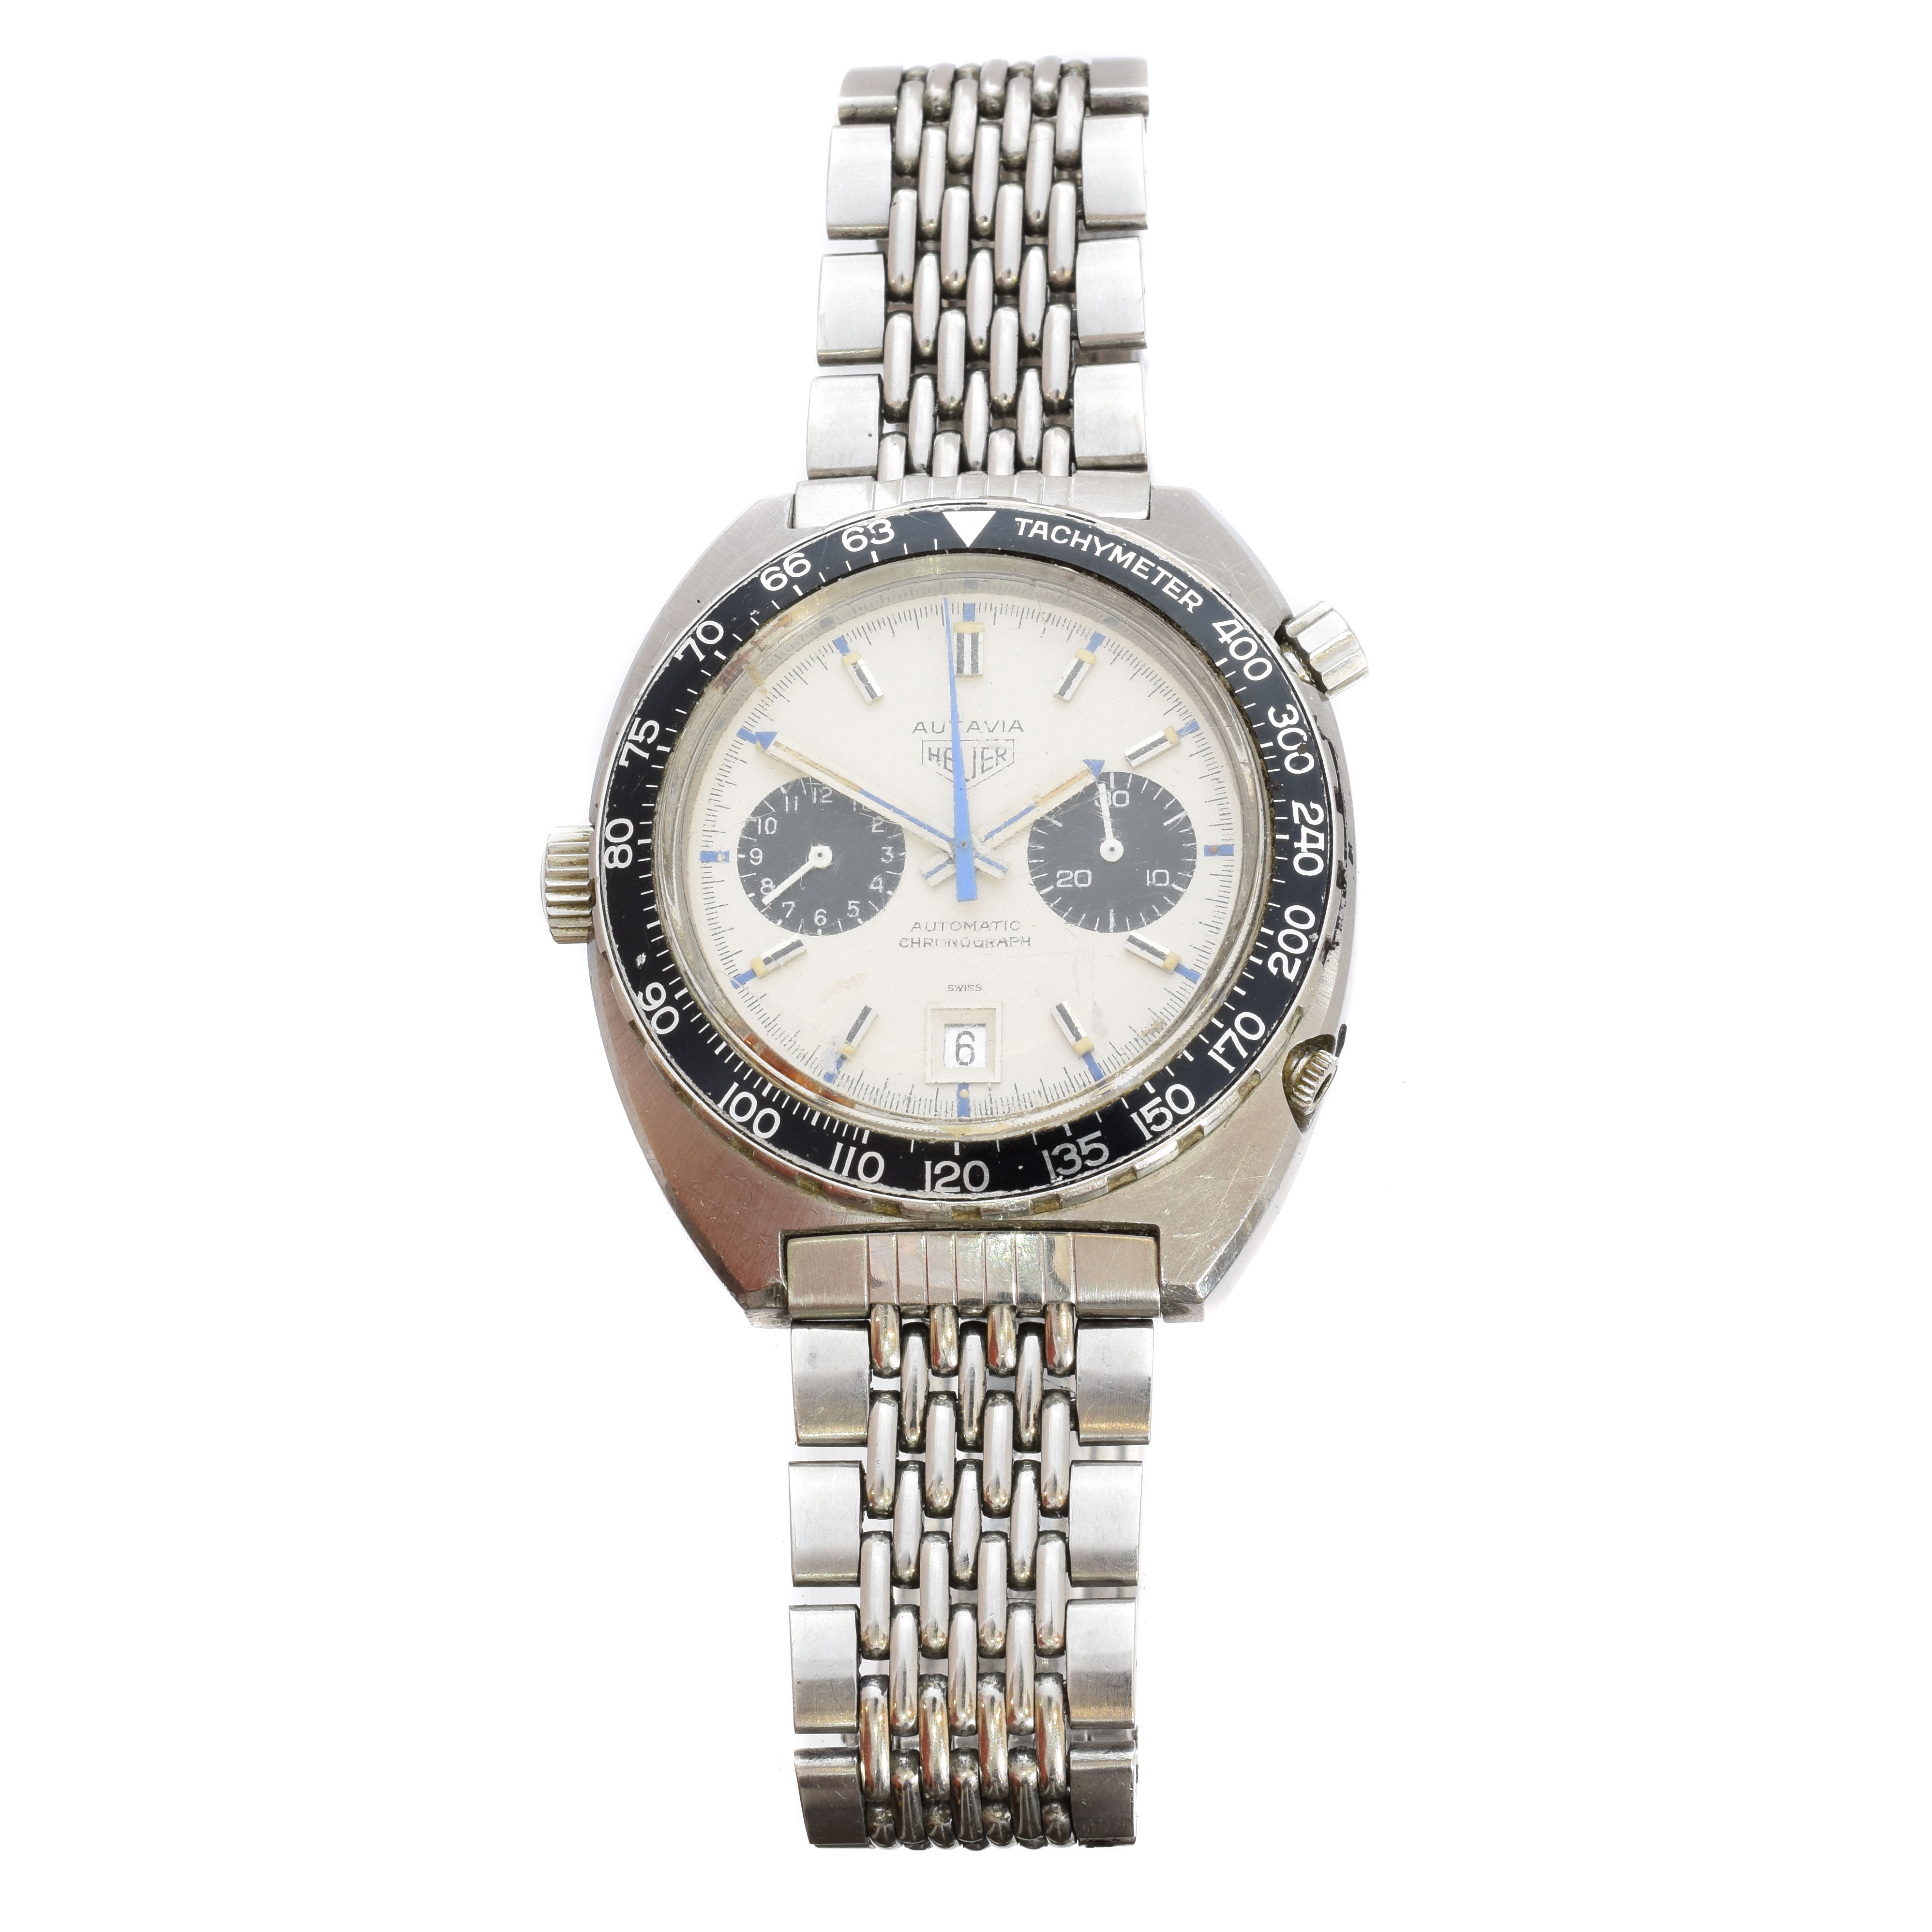 A gents stainless steel 'Jo Siffert' Autavia Heuer wristwatch, circa 1970, ref 1163T, sold £6,100